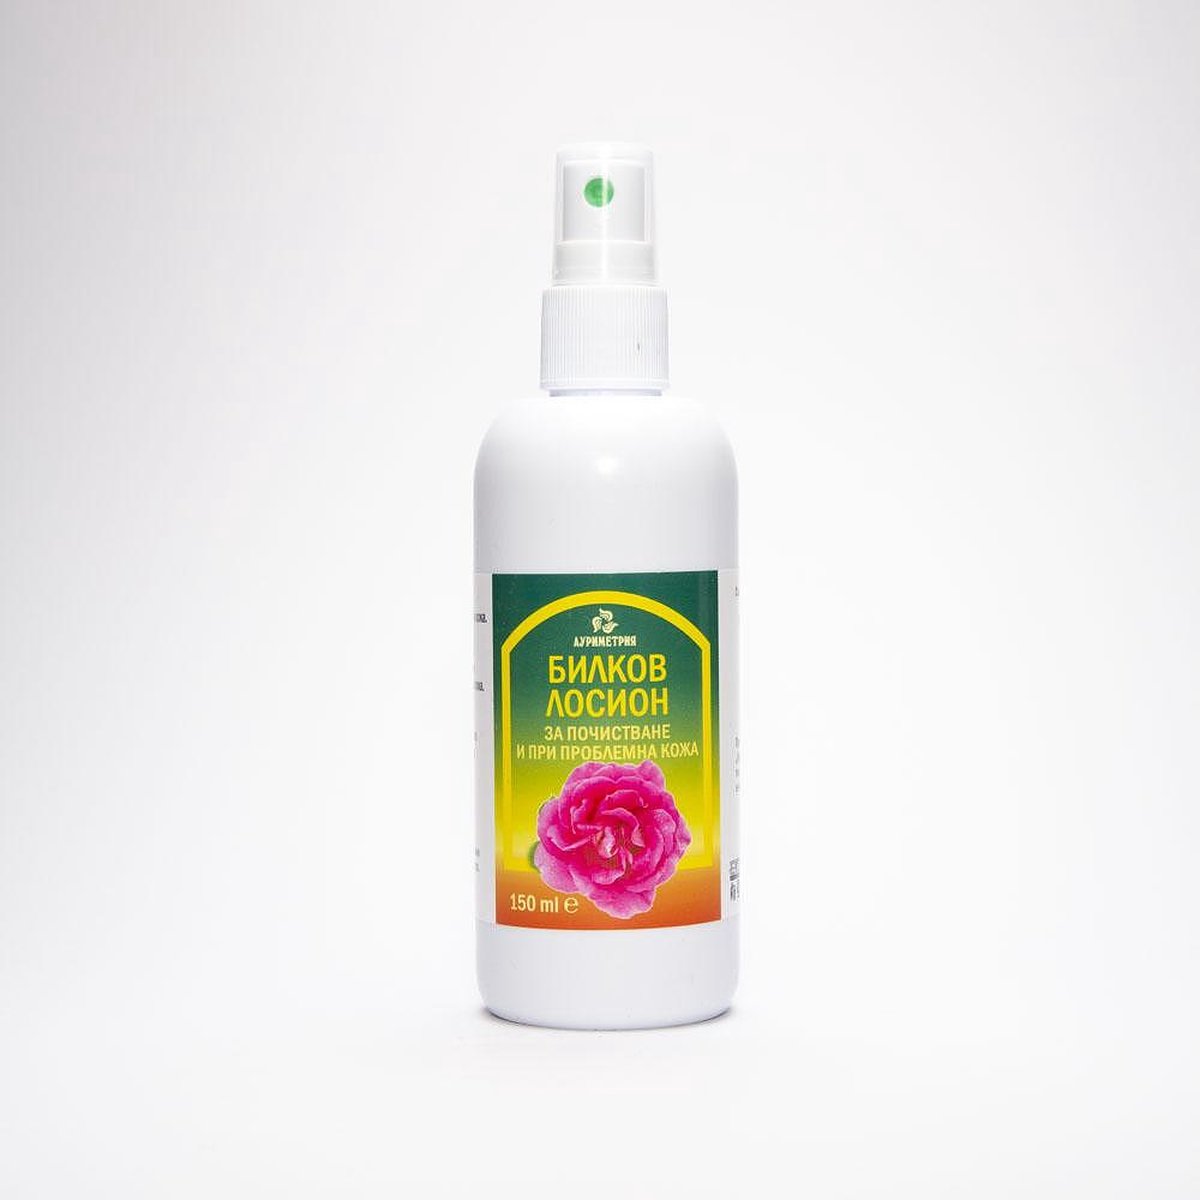 Aurimetry Kruidenlotion voor de probleemhuid - acne - vette huid - rozen water - lavendel - doeltreffend tonic tegen puisjes 150ml